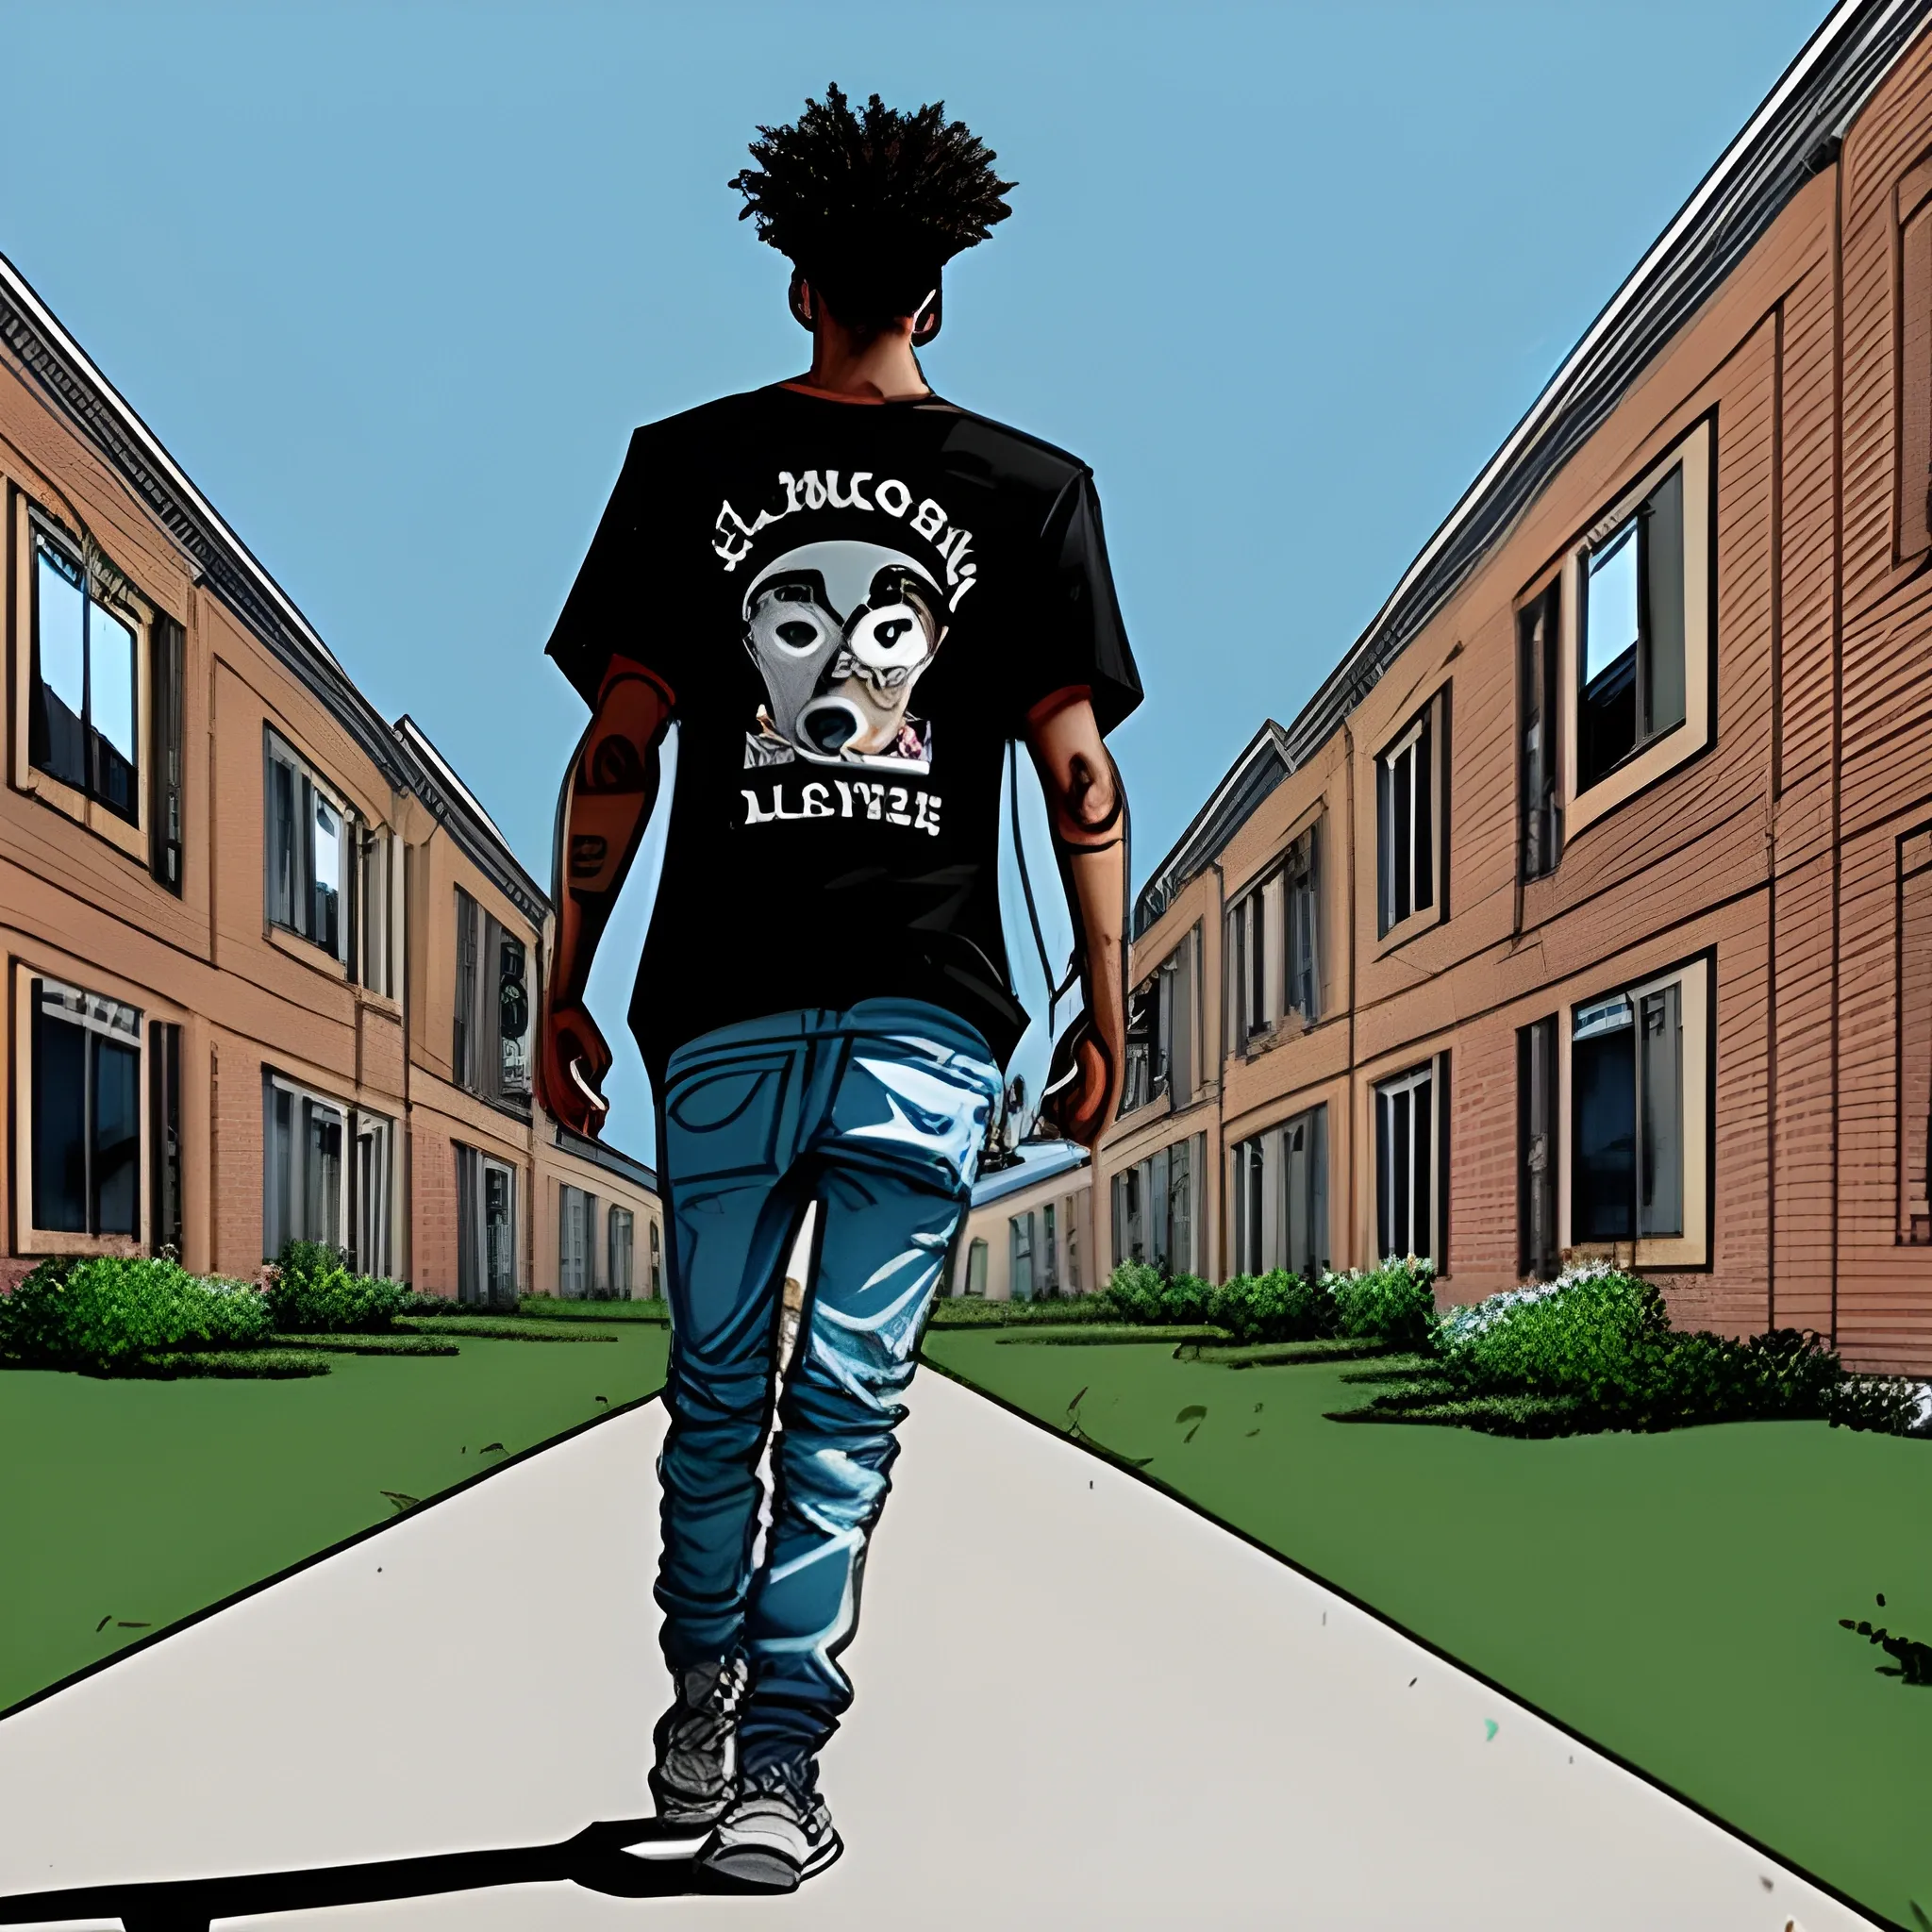 A 21-year-old blood gang member walking backwards through an American housing project, Cartoon